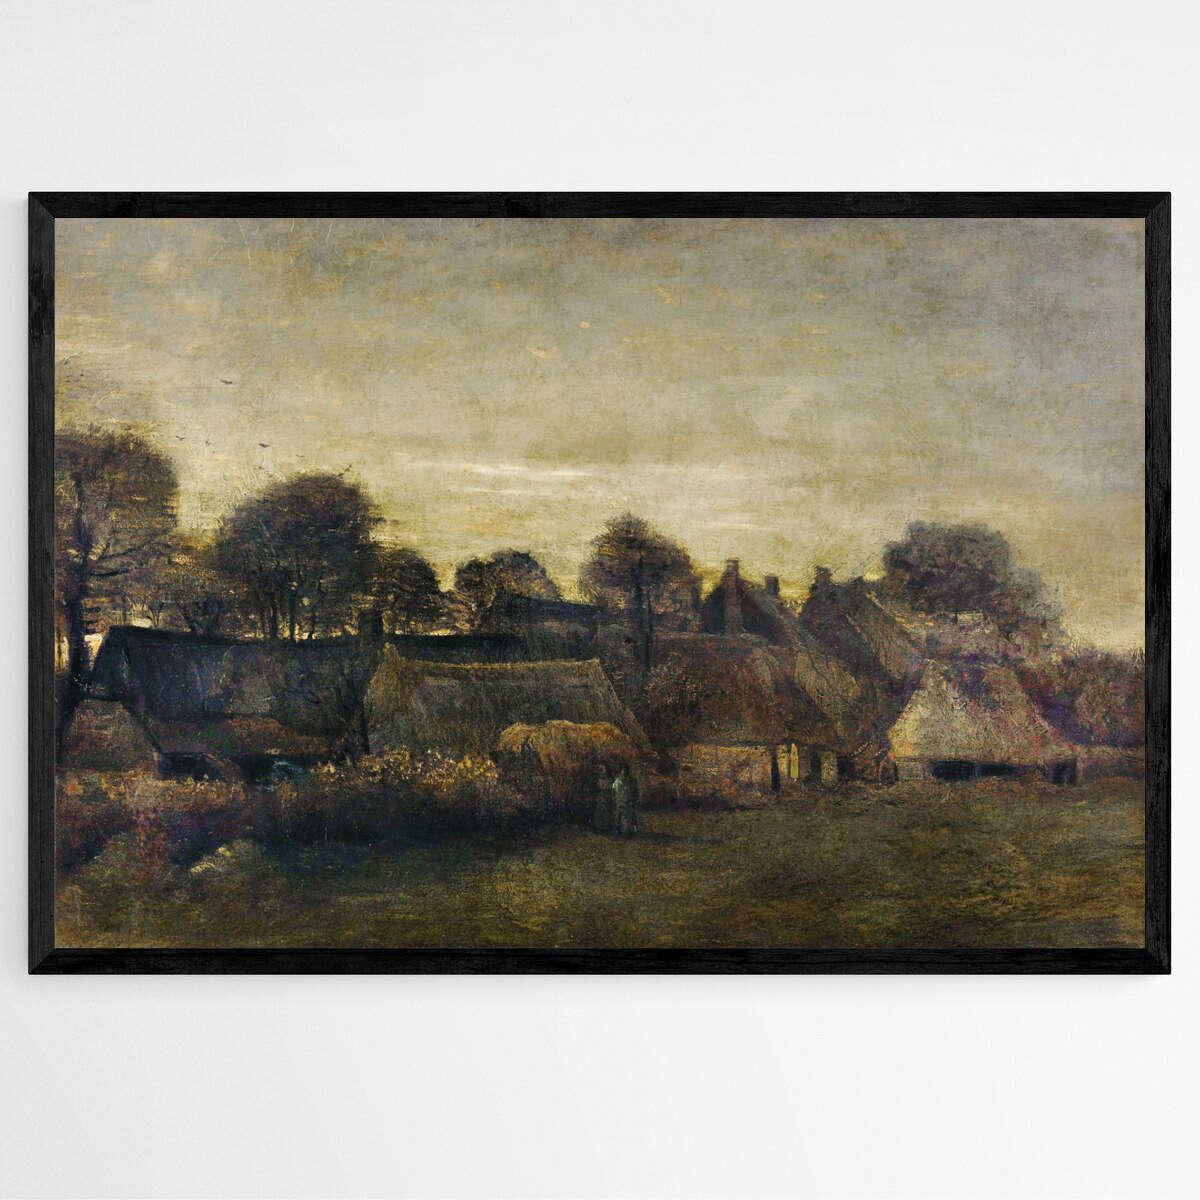 Farming Village at Twilight by Vincent Van Gogh | Vincent Van Gogh Wall Art Prints - The Canvas Hive